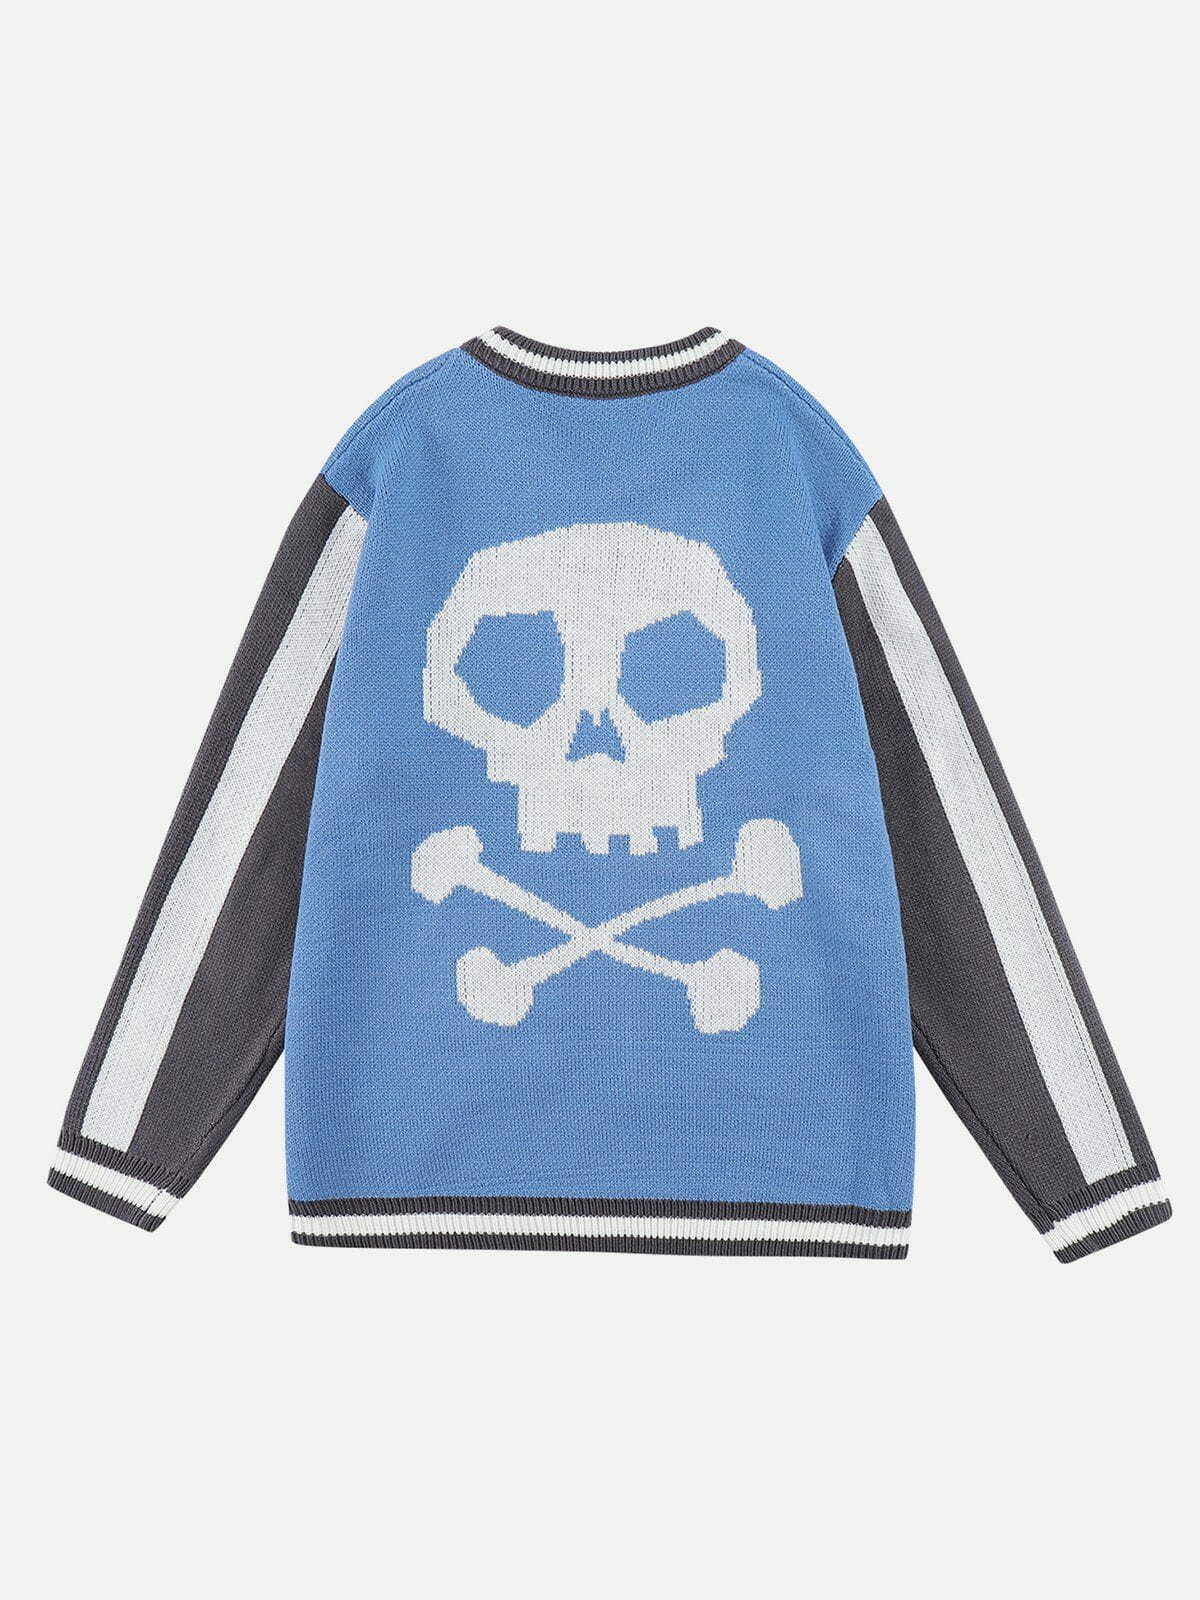 stylish skeleton stitching sweater edgy y2k fashion essential 2372